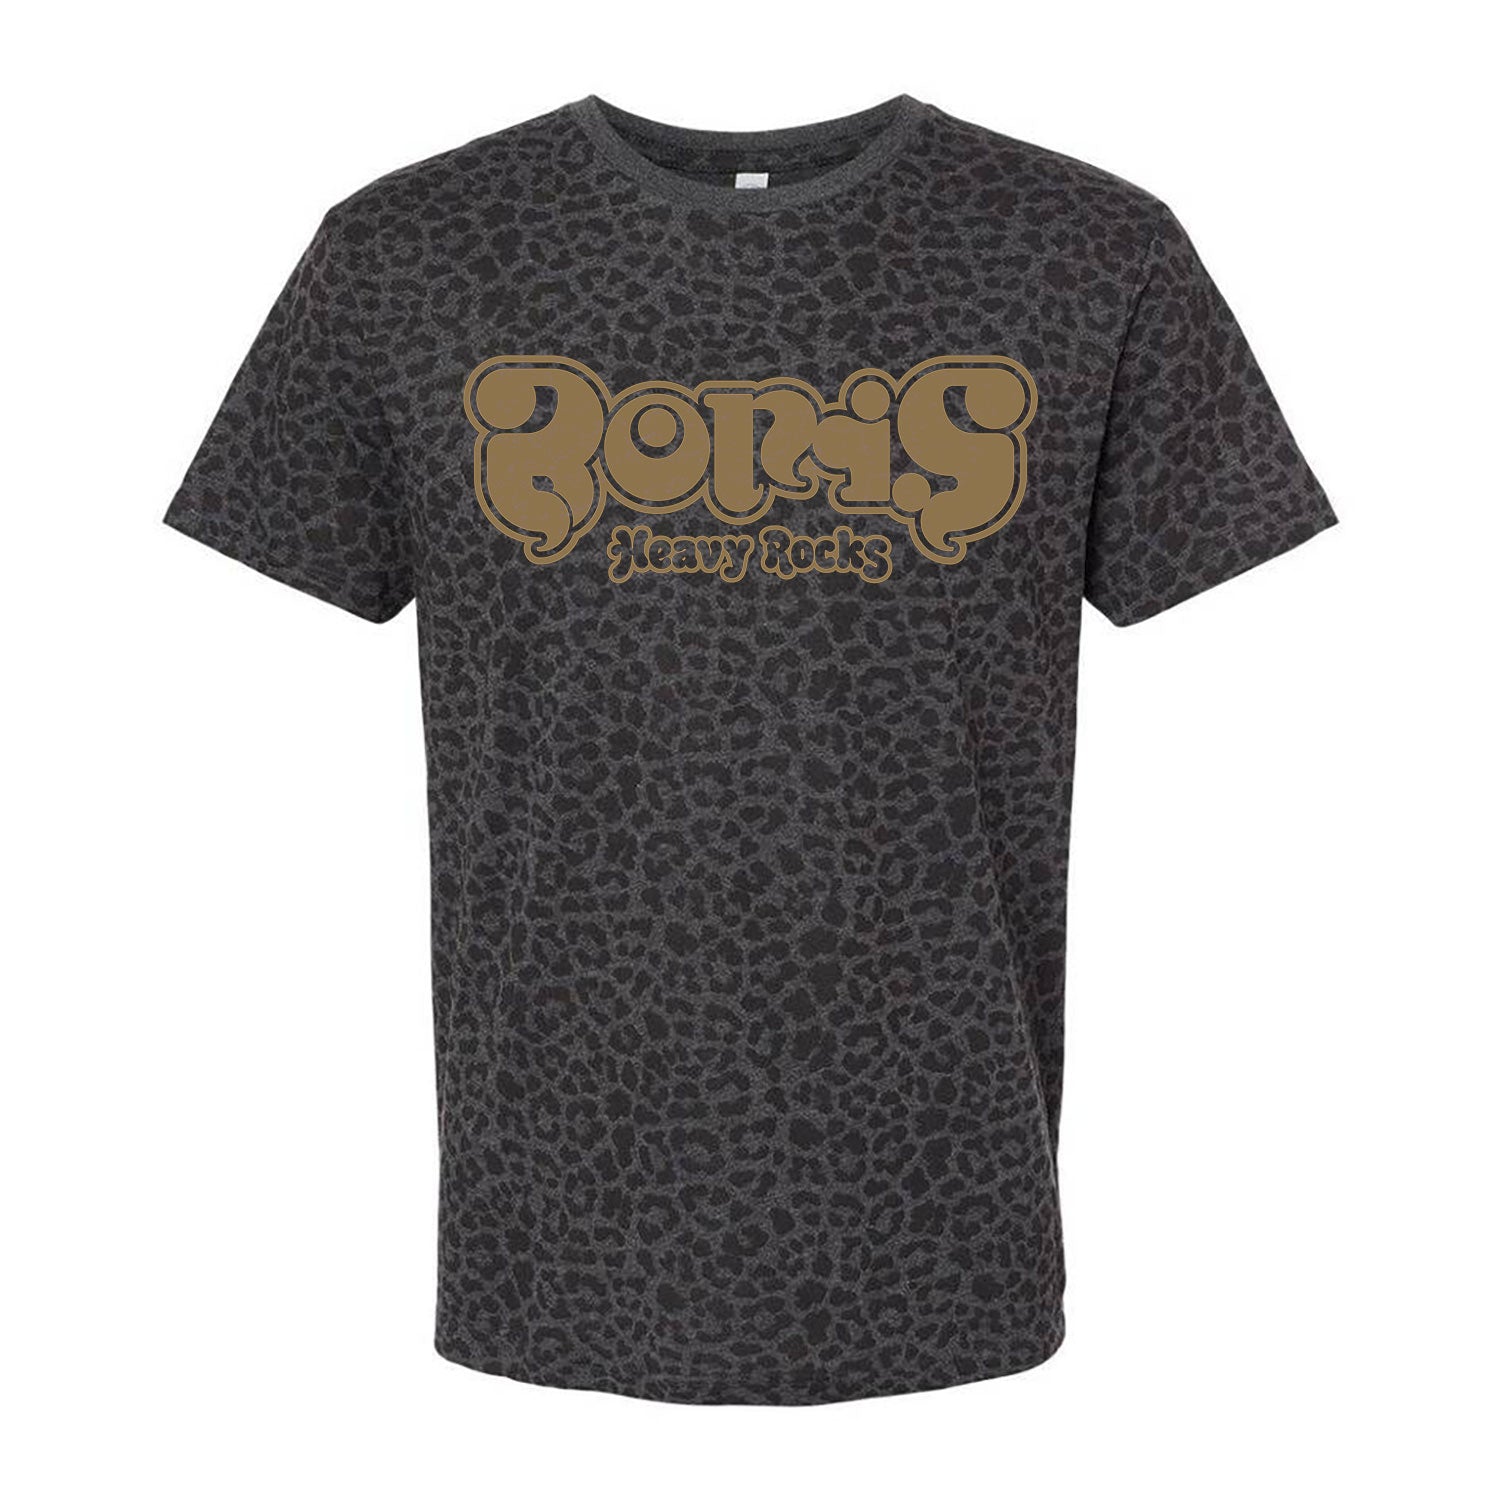 Boris "Heavy Rocks (Leopard Print)" T-Shirt